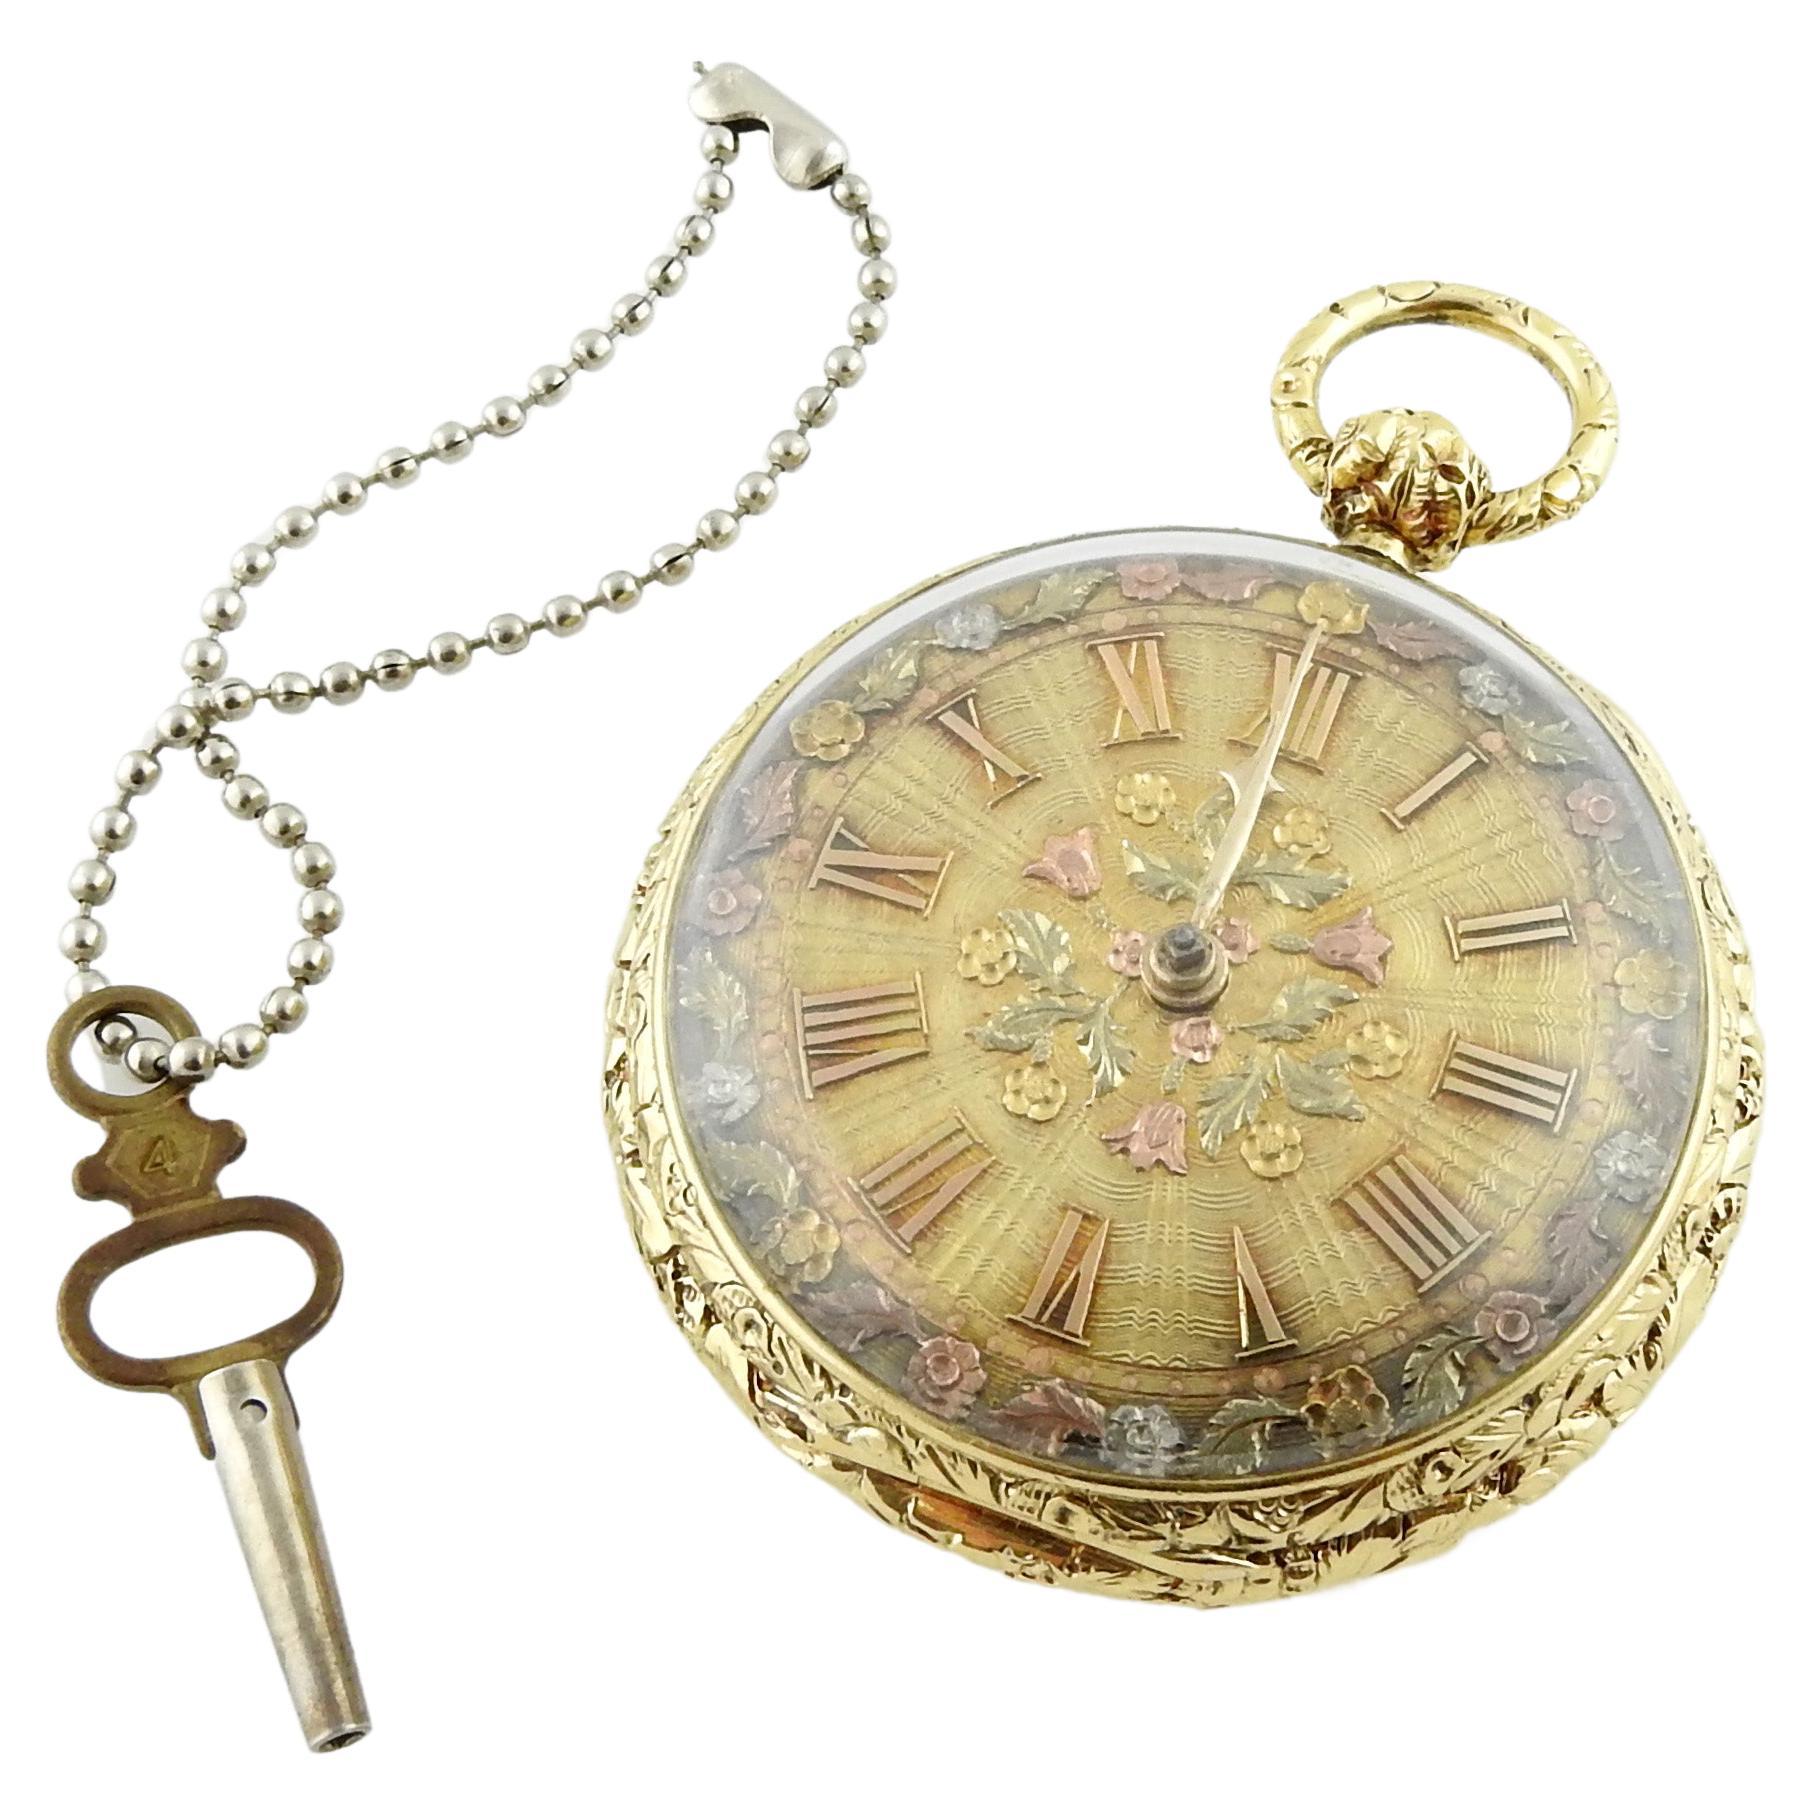 Verge Crown Wheel Key Winding 18K Yellow Gold Ornate Pocket Watch